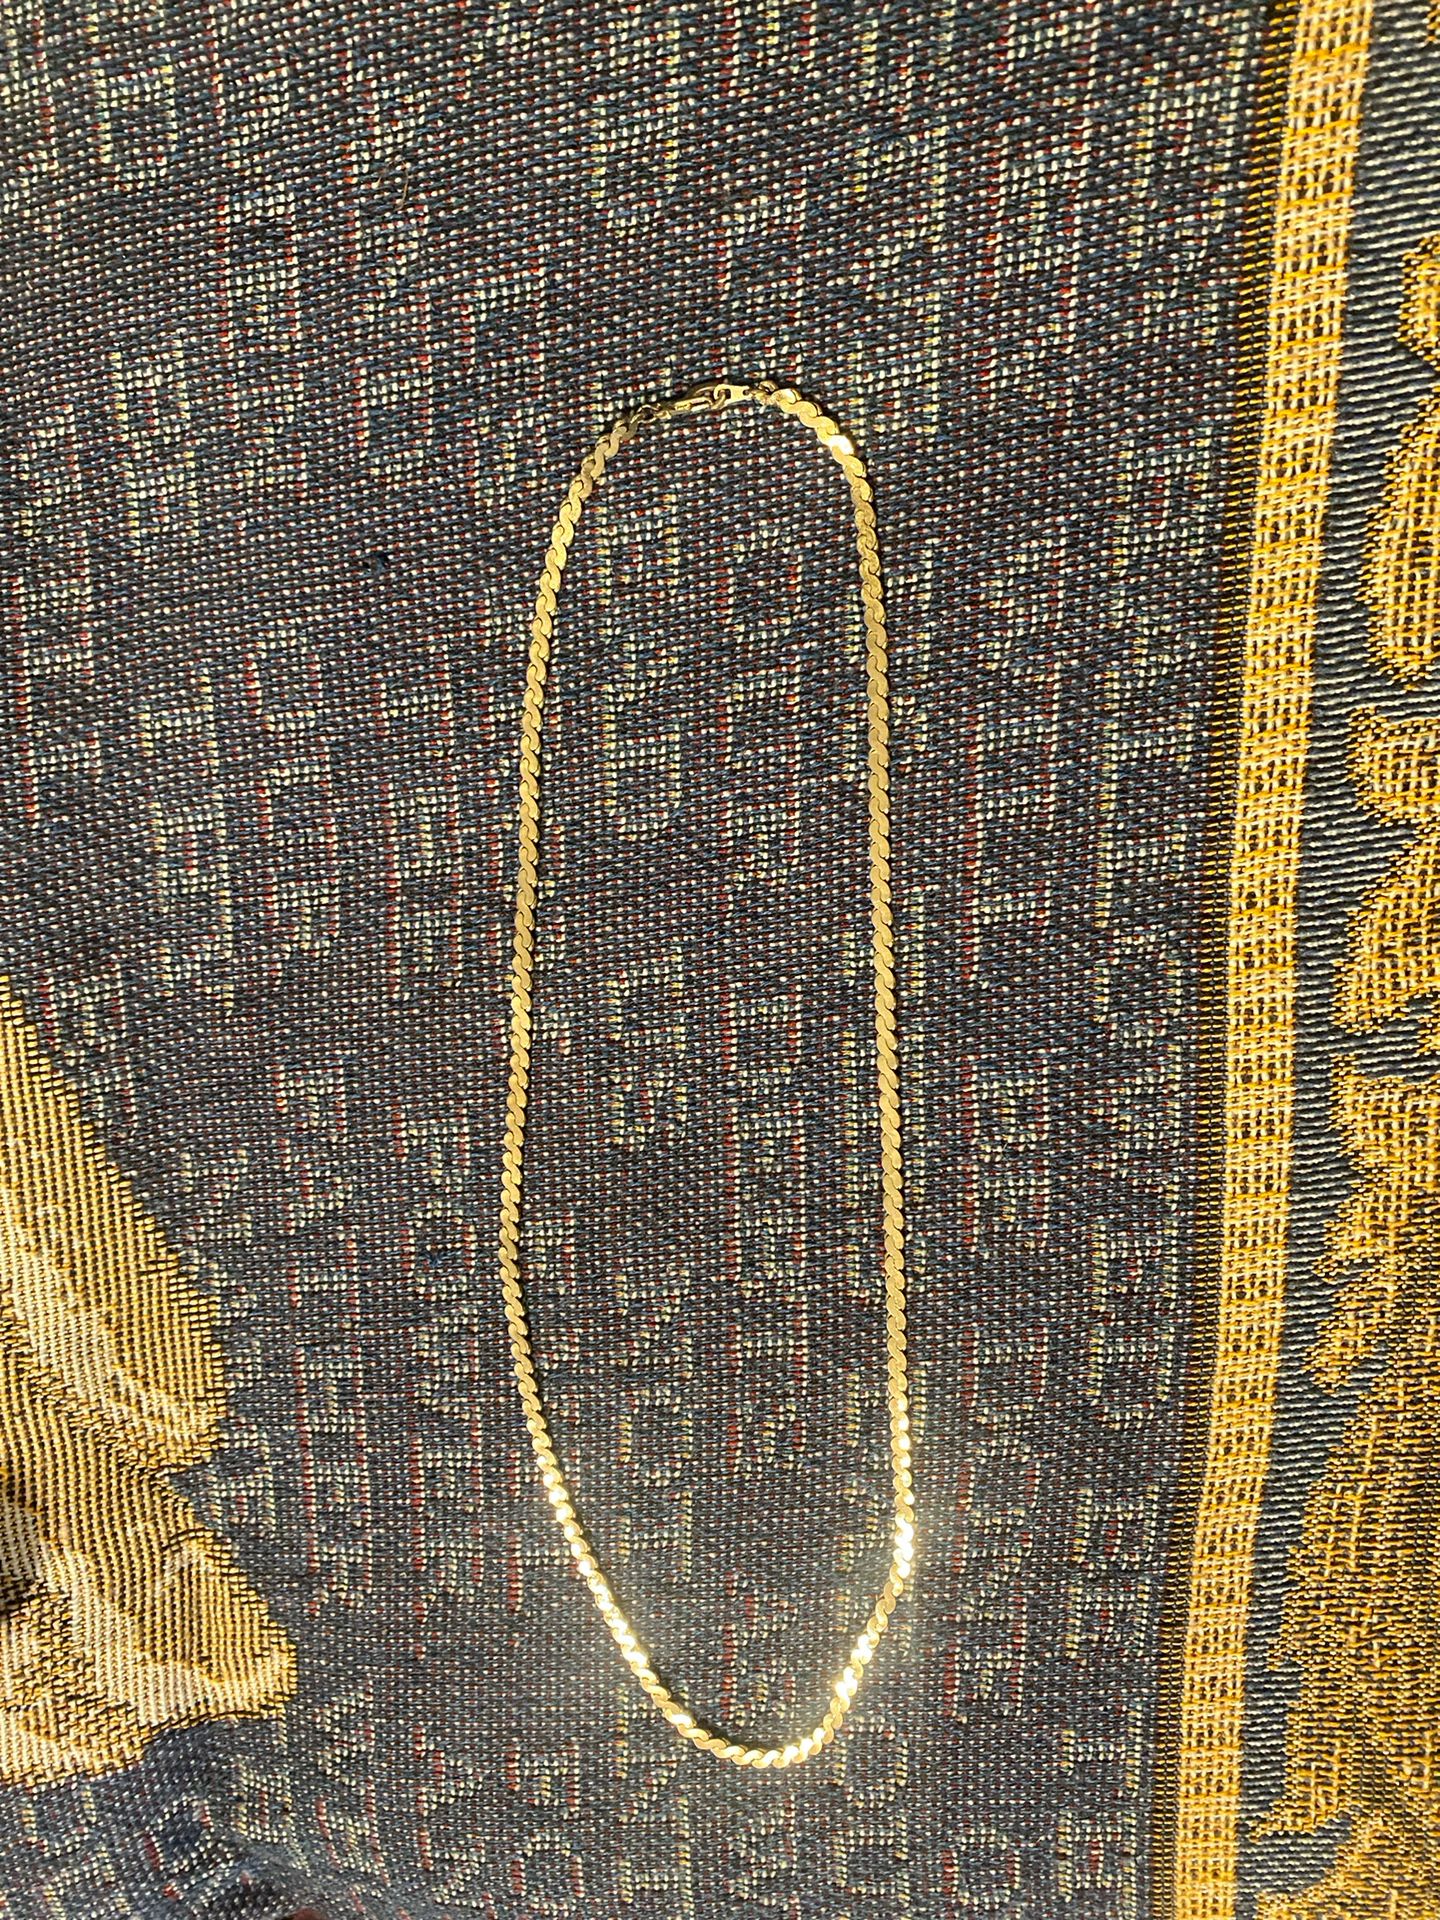 24" gold chain